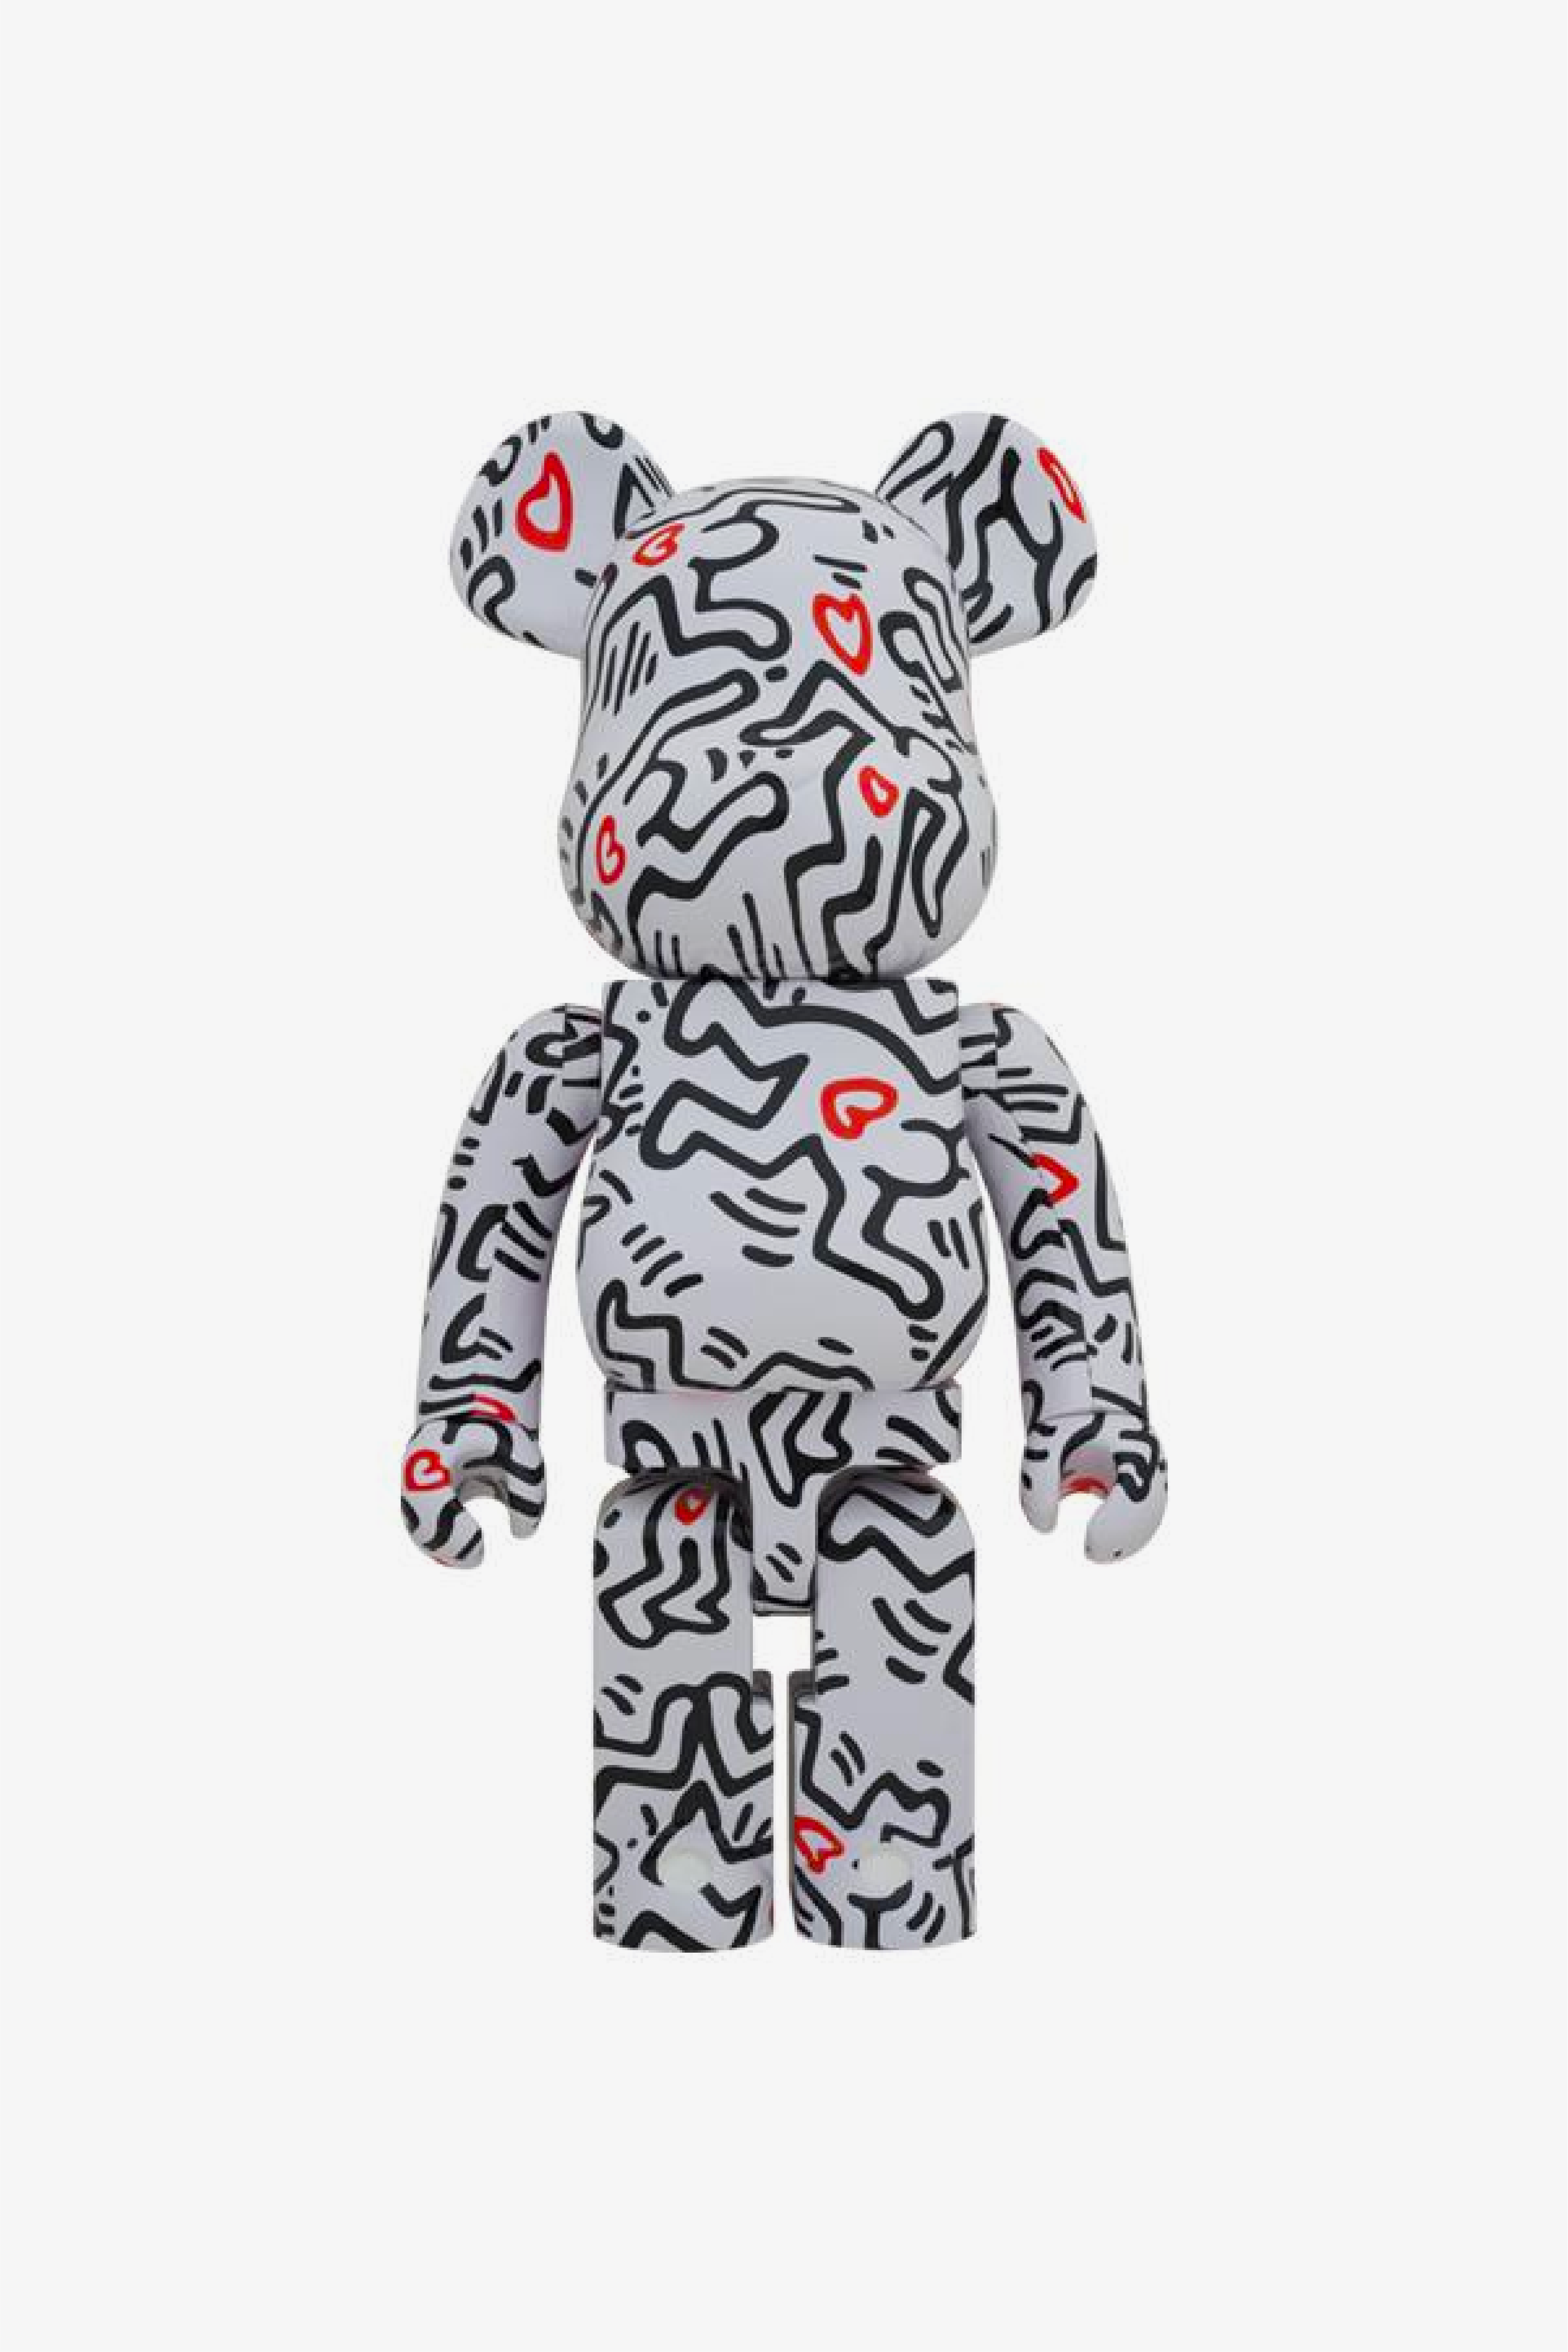 Selectshop FRAME - MEDICOM TOY Be@rbrick  Keith Haring 1000% Collectibles Dubai